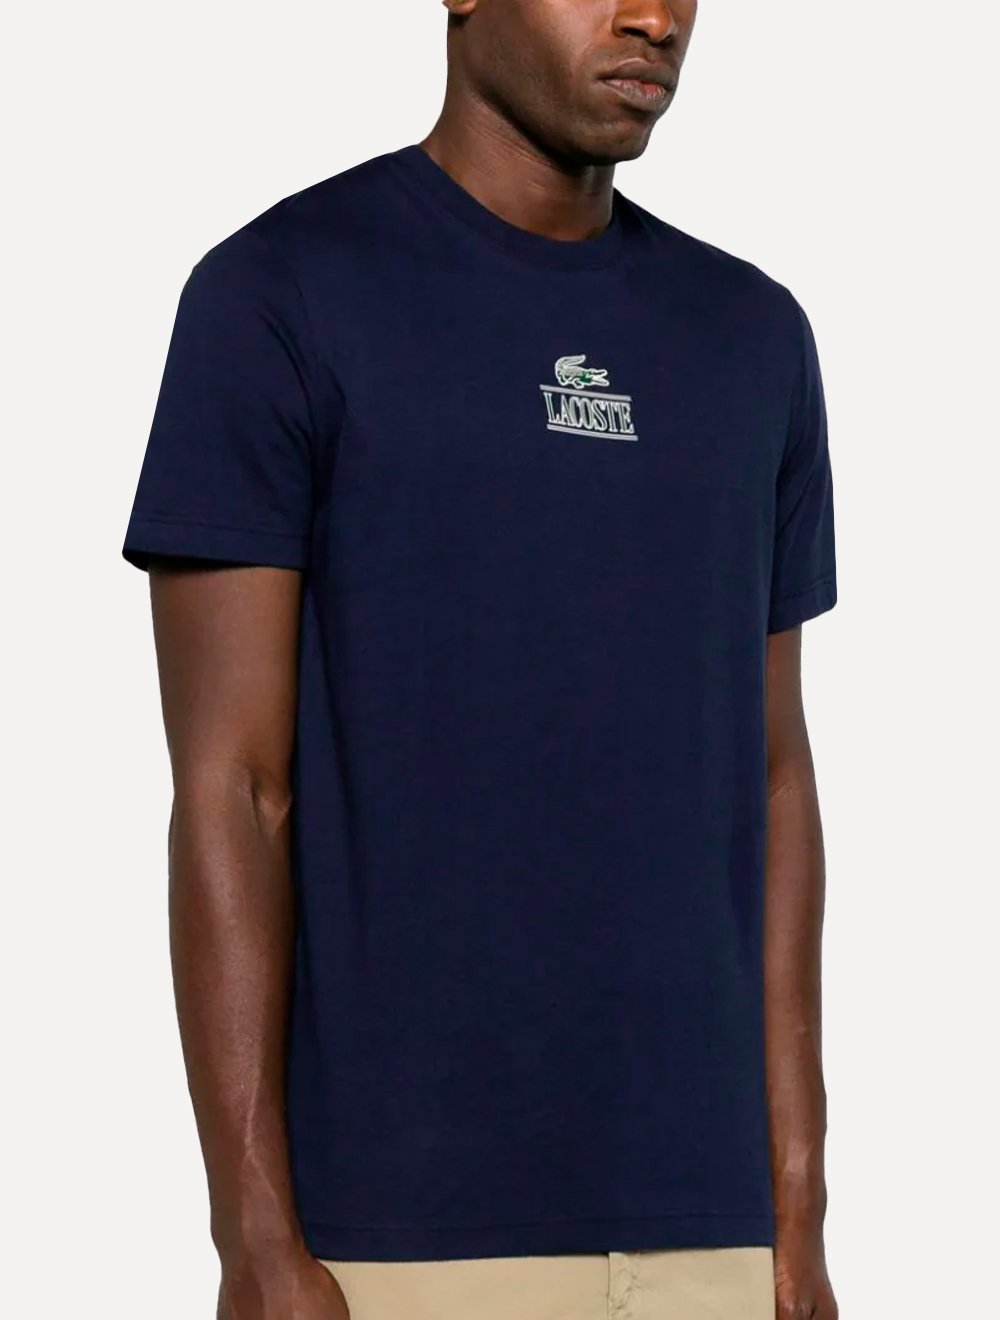 Camiseta Lacoste Masculina Regular Cotton Jersey Vintage Branded Azul Marinho